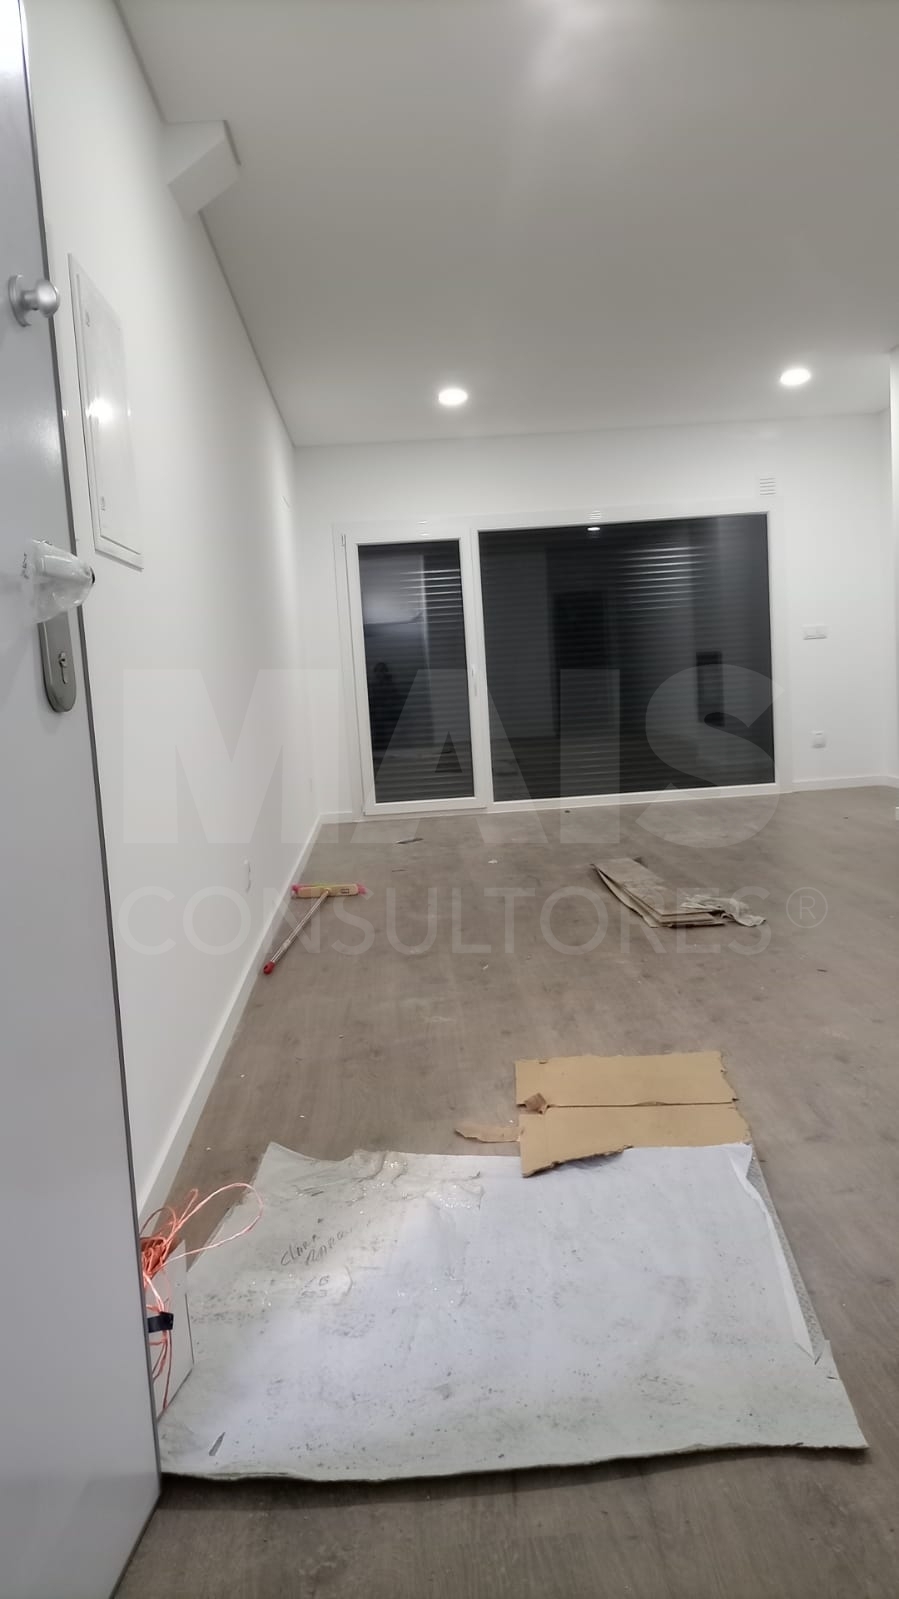 New 4-bedroom semi-detached house in Fernão Ferro